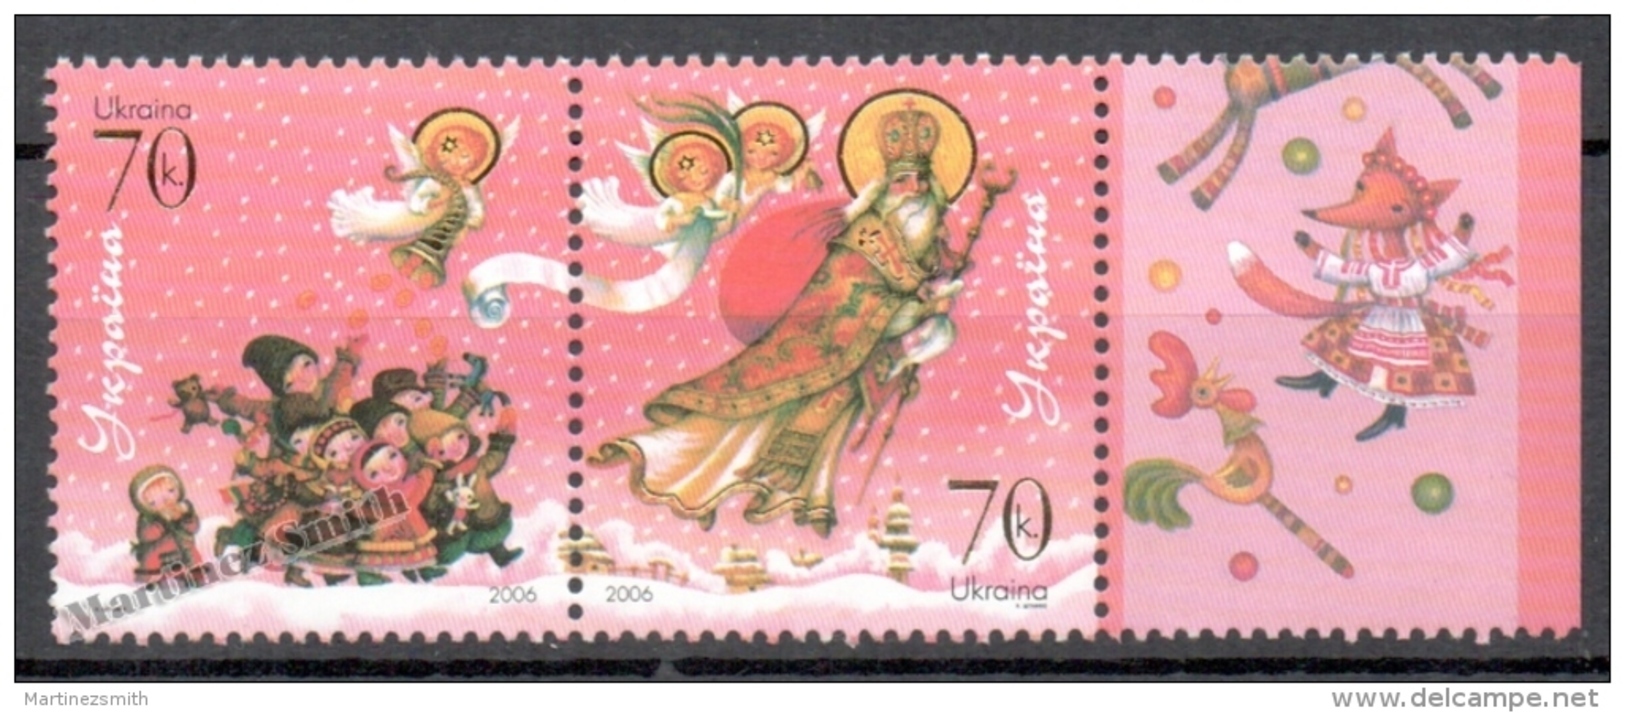 Ukraine 2006 Yvert 745-46, St. Nicholas - MNH - Ucrania